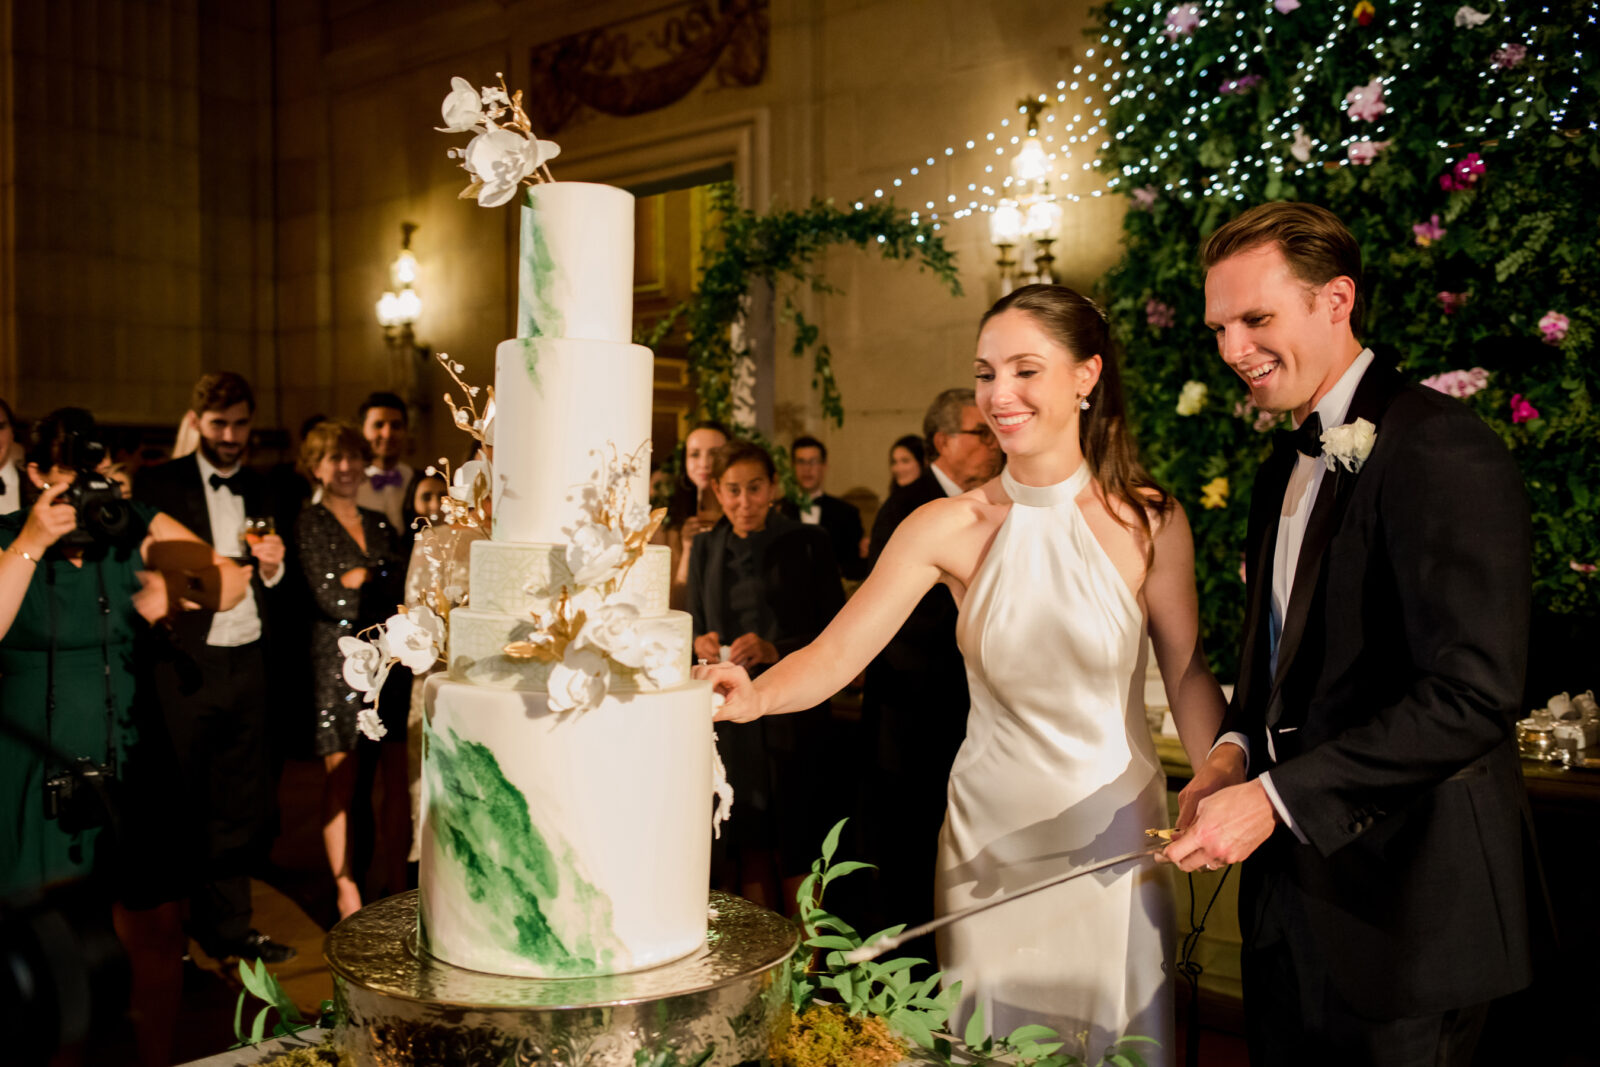 5-Tier wedding cake